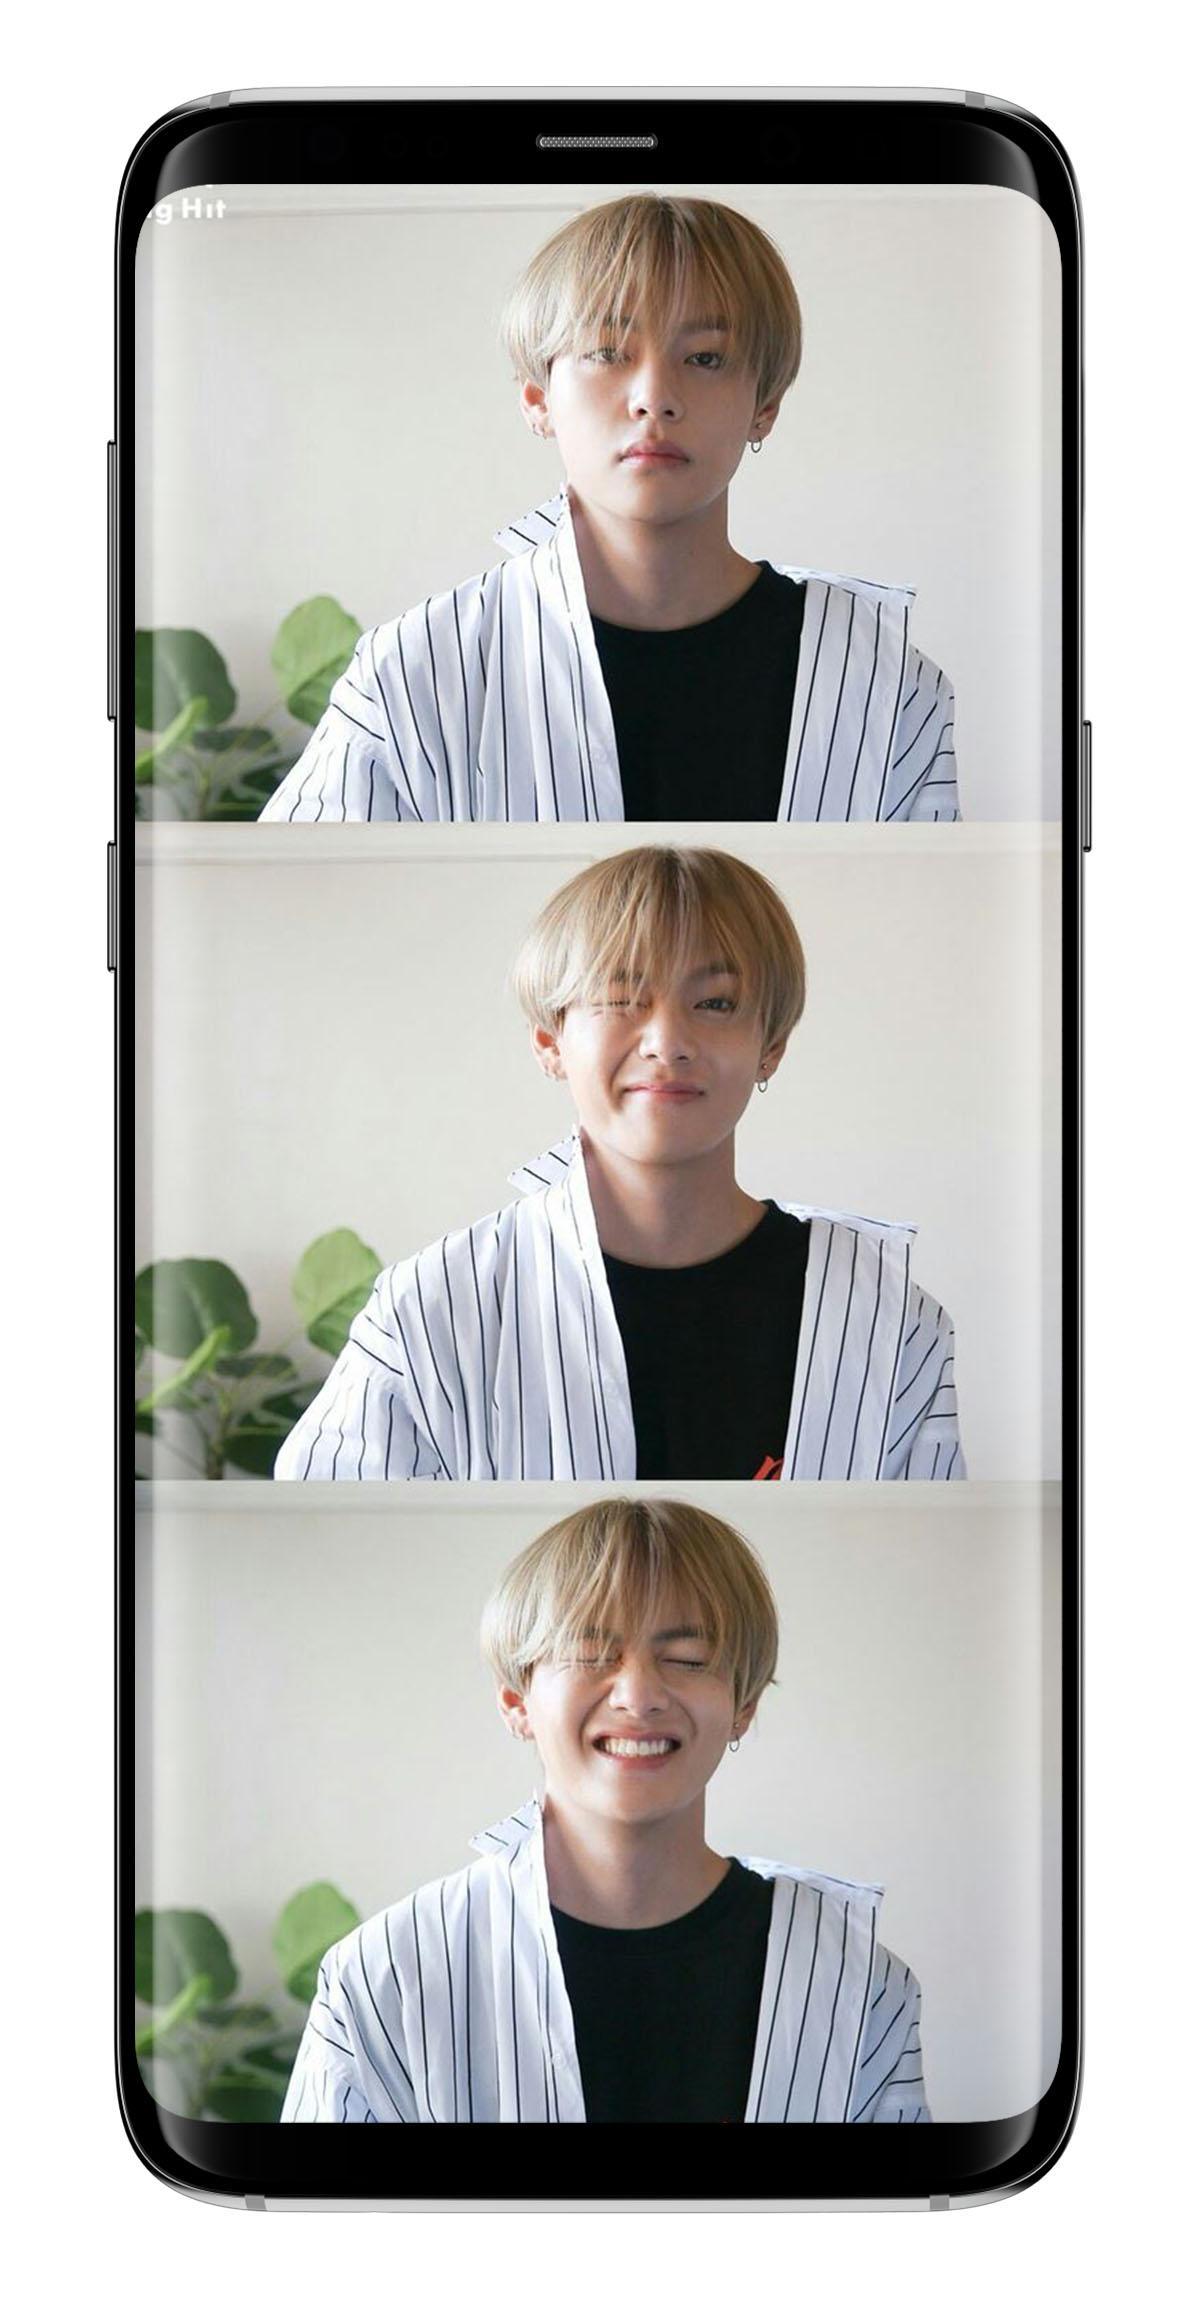 Bts V Kim Taehyung Wallpaper K Pop For Android Apk Download - bts v roblox